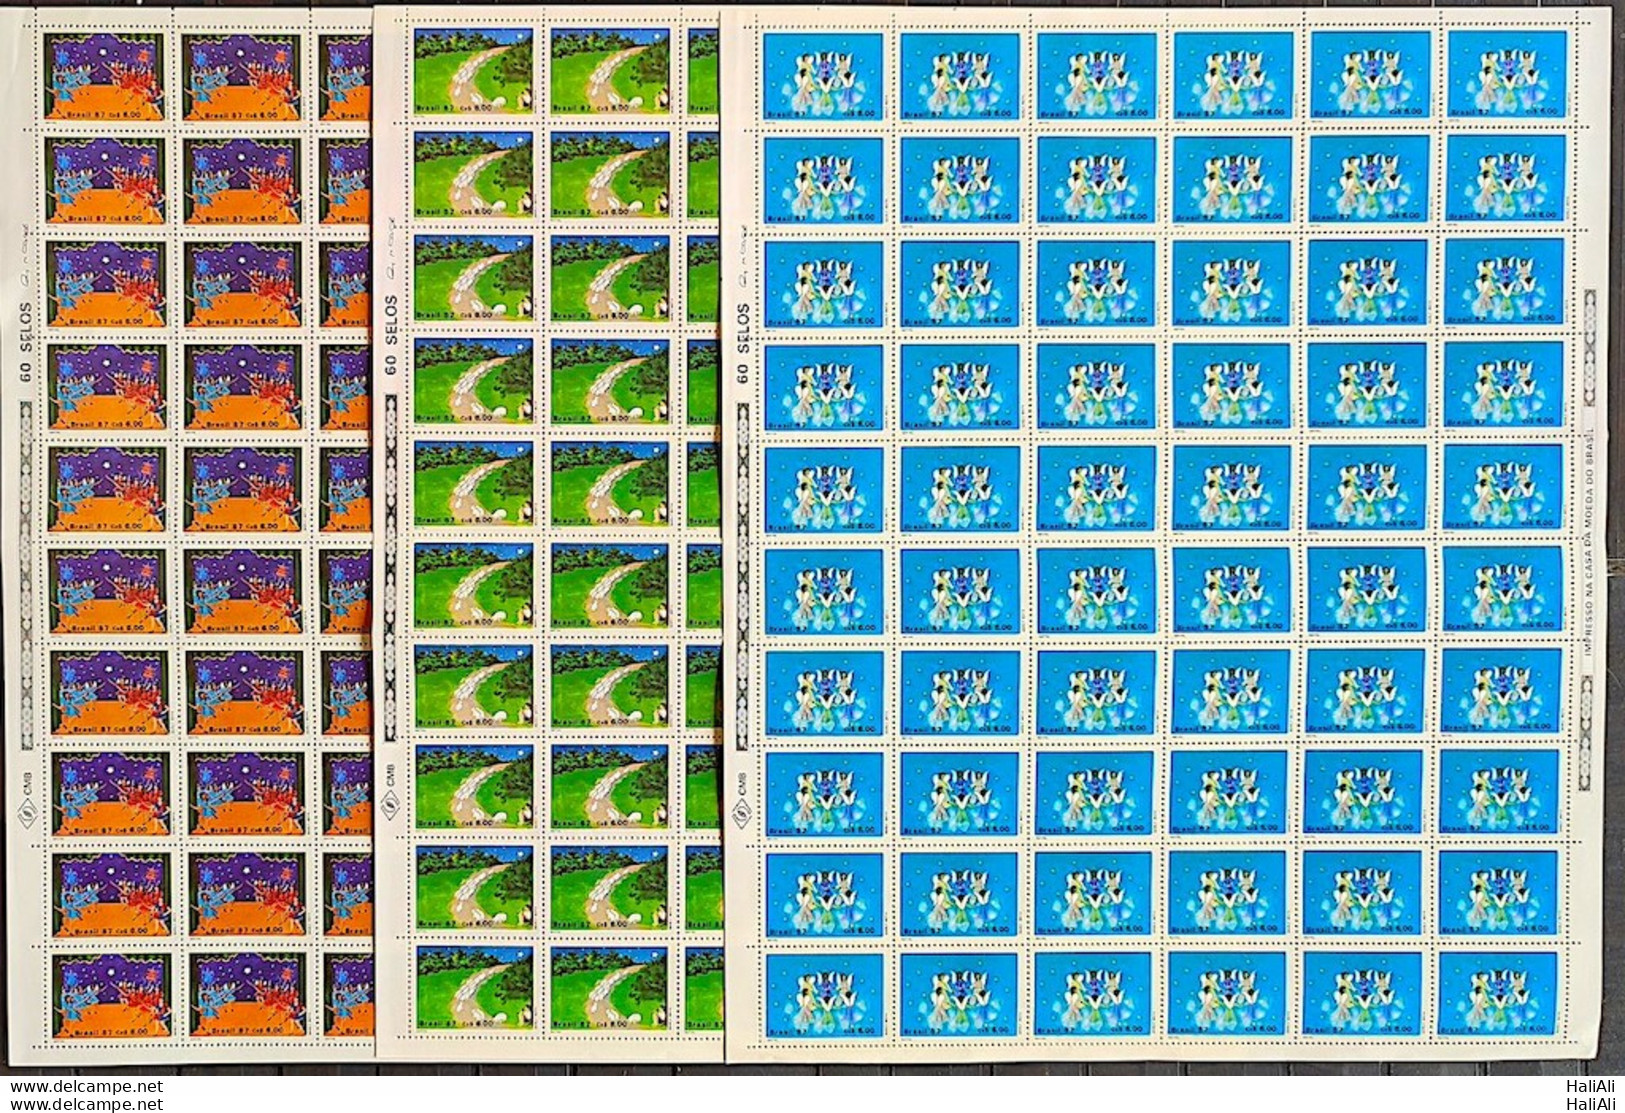 C 1568 Brazil Stamp Christmas Religion 1987 Sheet Complete Series - Nuovi